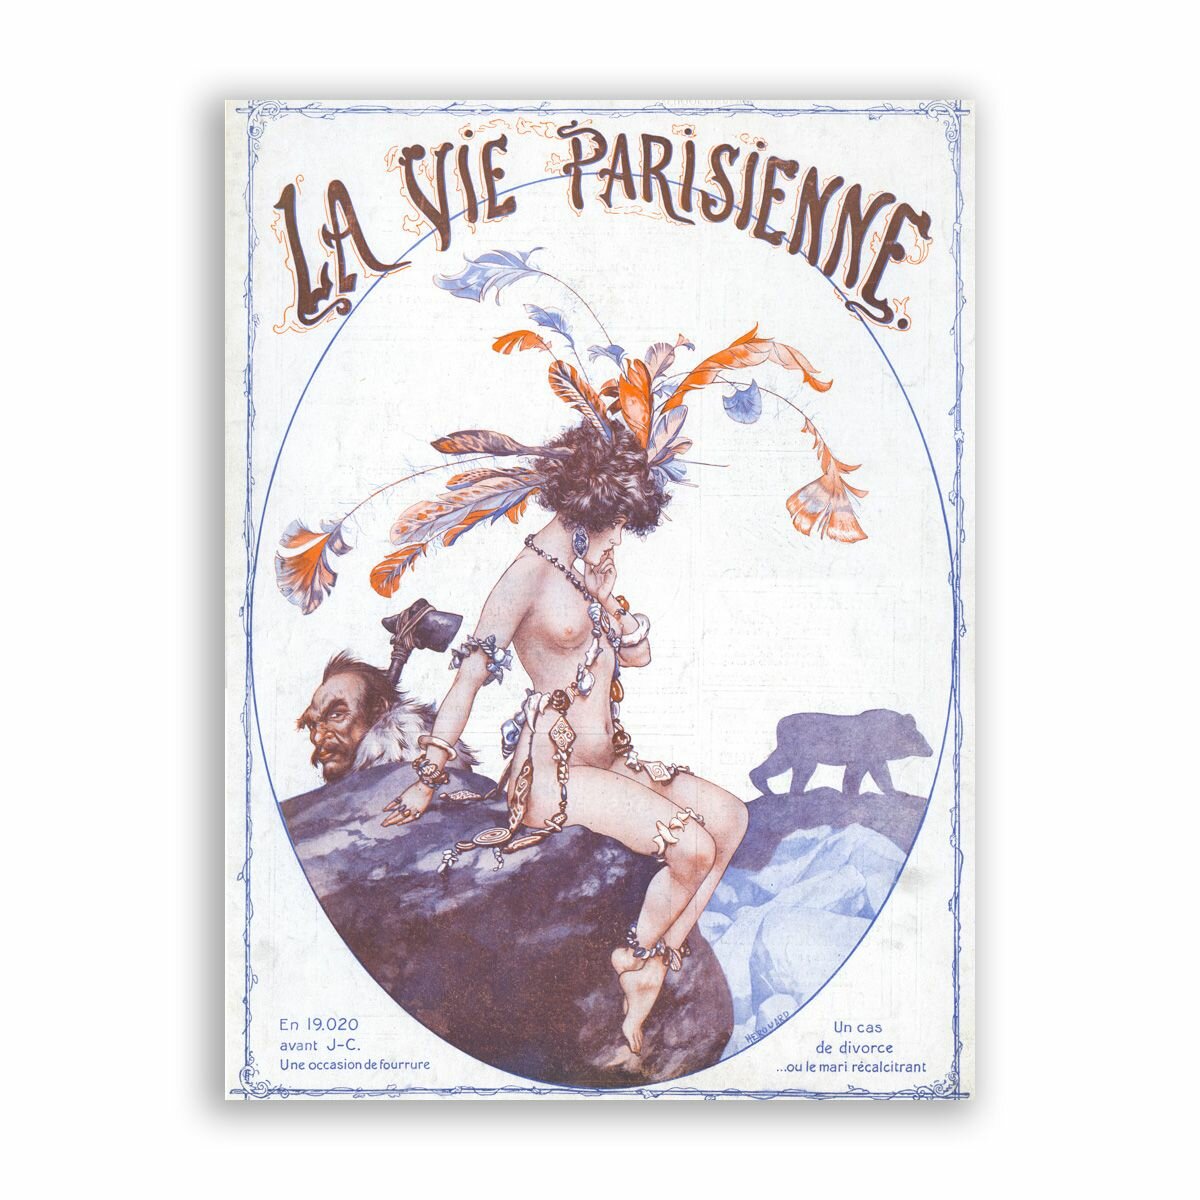 Постер на бумаге в стиле Пин-ап / La Vie Parisienne - En 19.020 avant J-C / Размер 30 x 40 см